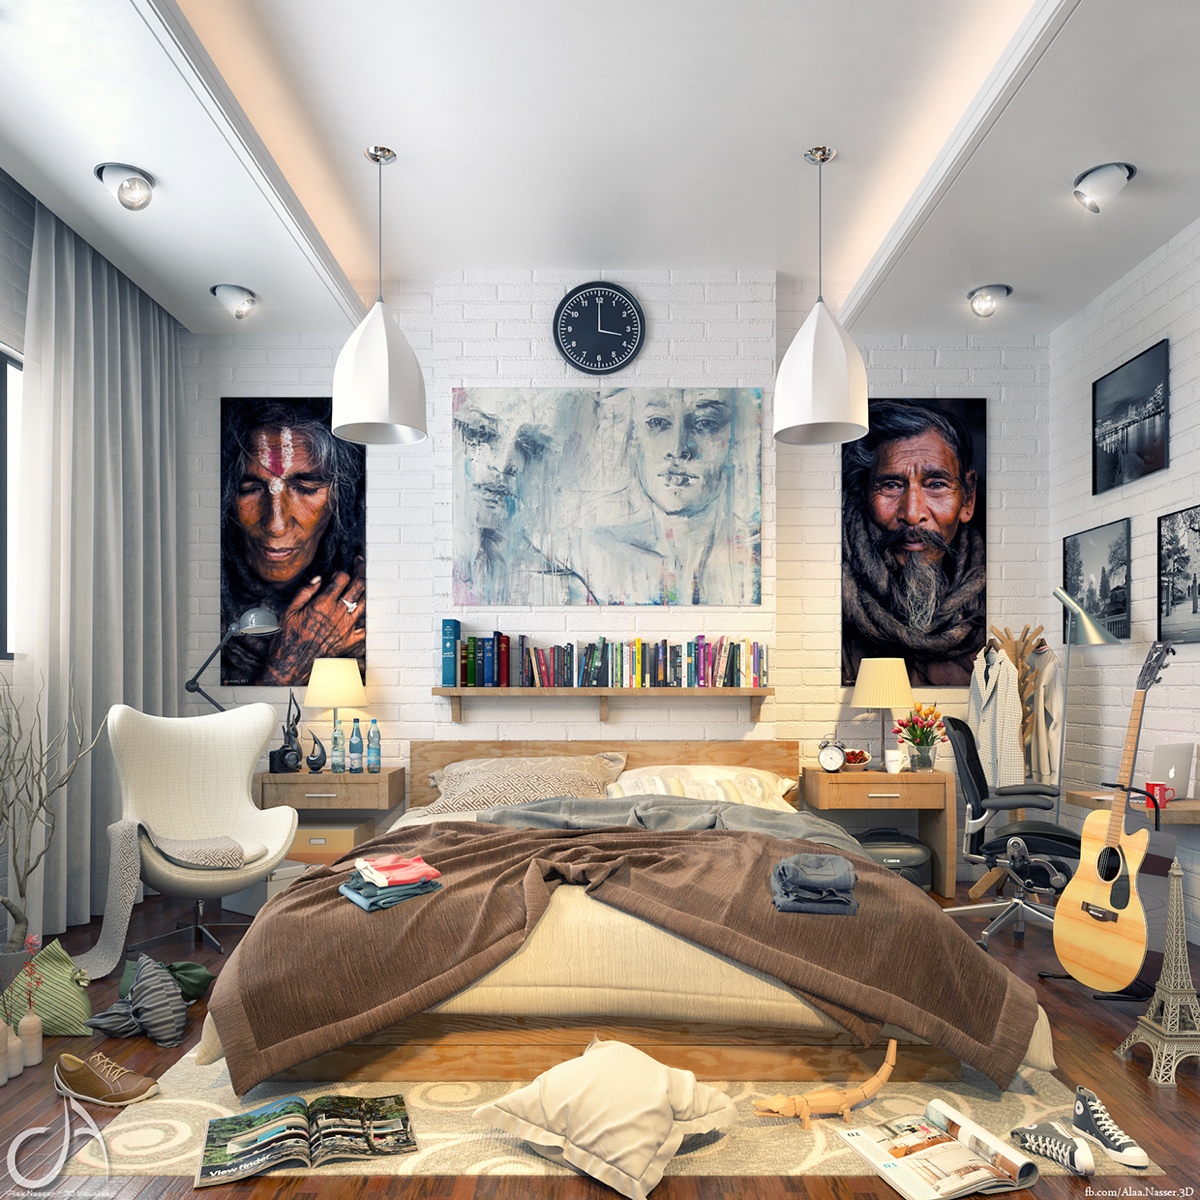 hipster bedroom decor   Interior Design Ideas